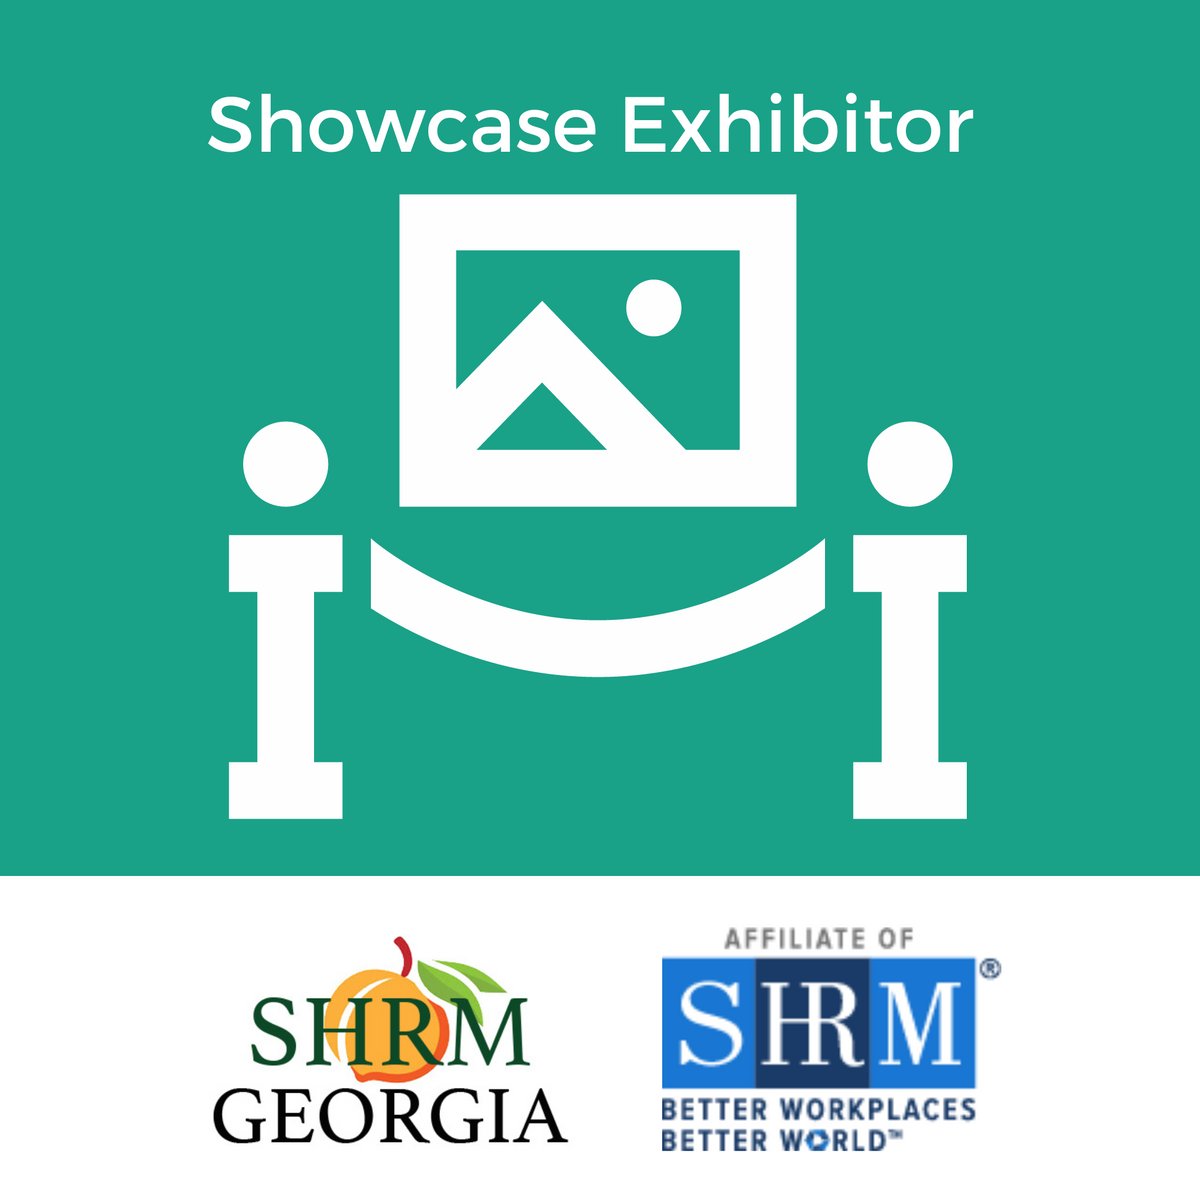 23 GA SHRM Annual - Showcase Exhibitor